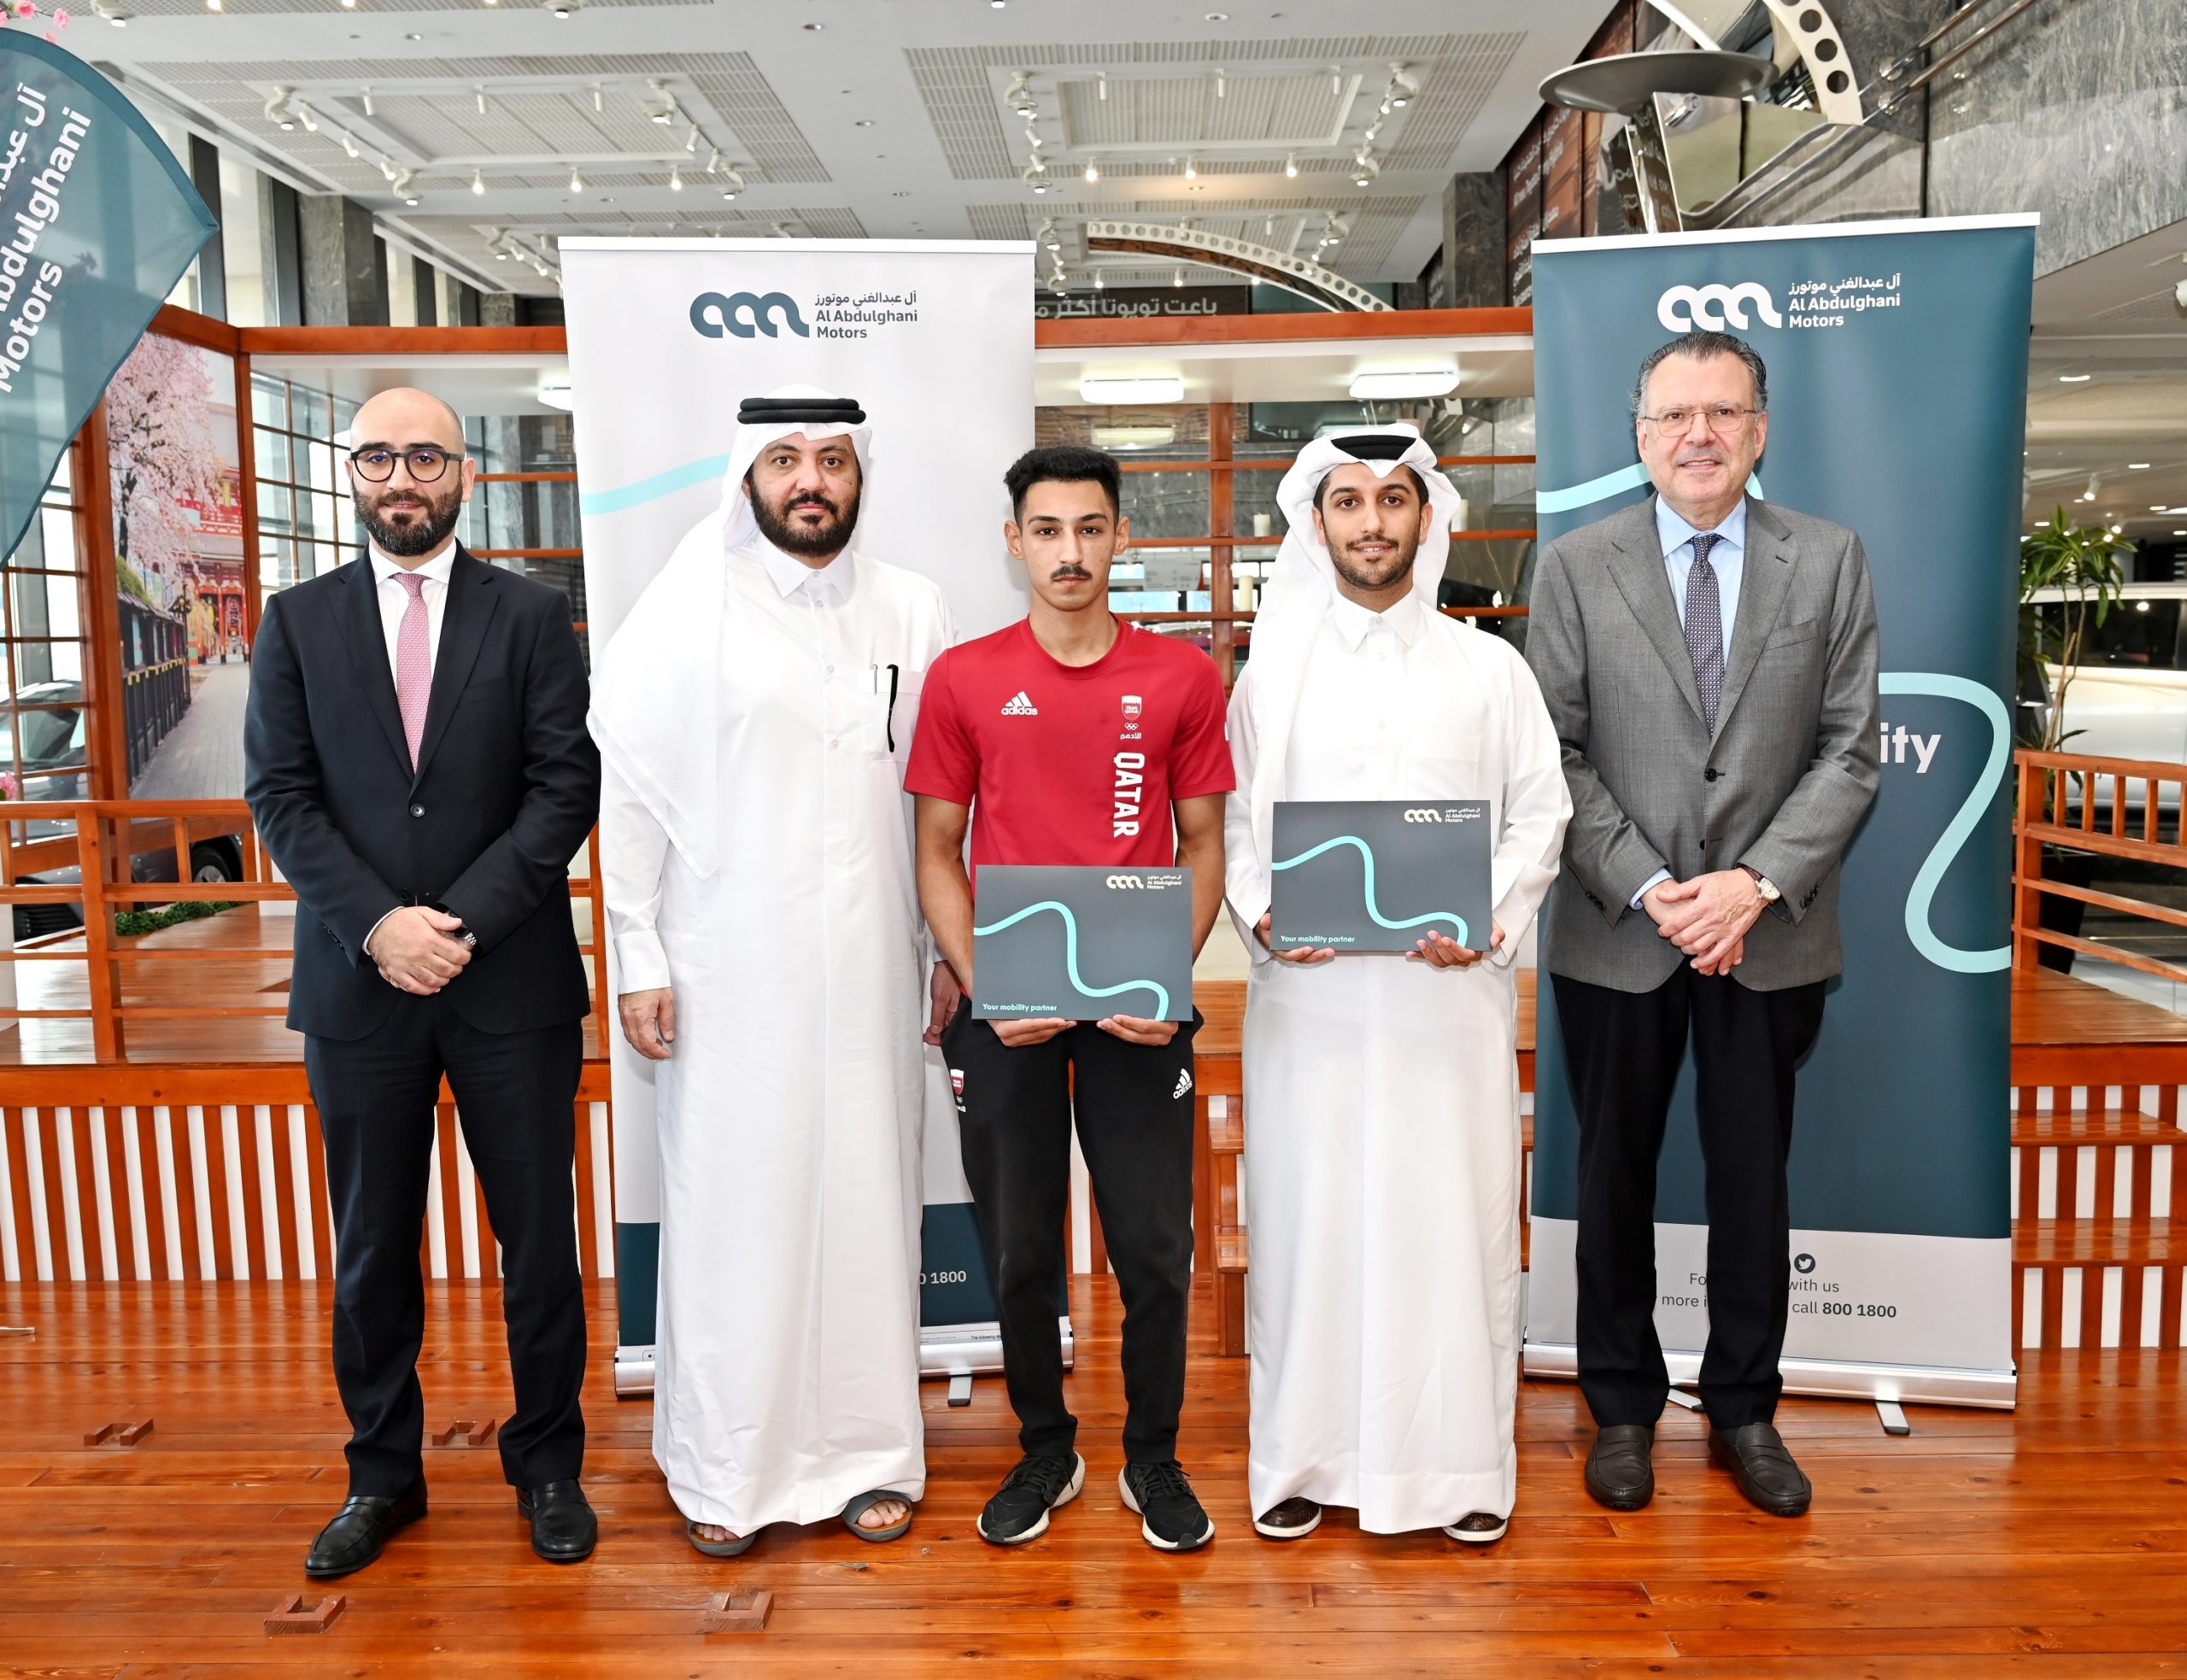 Al Abdulghani Motors welcomes sports champion Ali Radi Arshid to join the global “Start Your Impossible” initiative